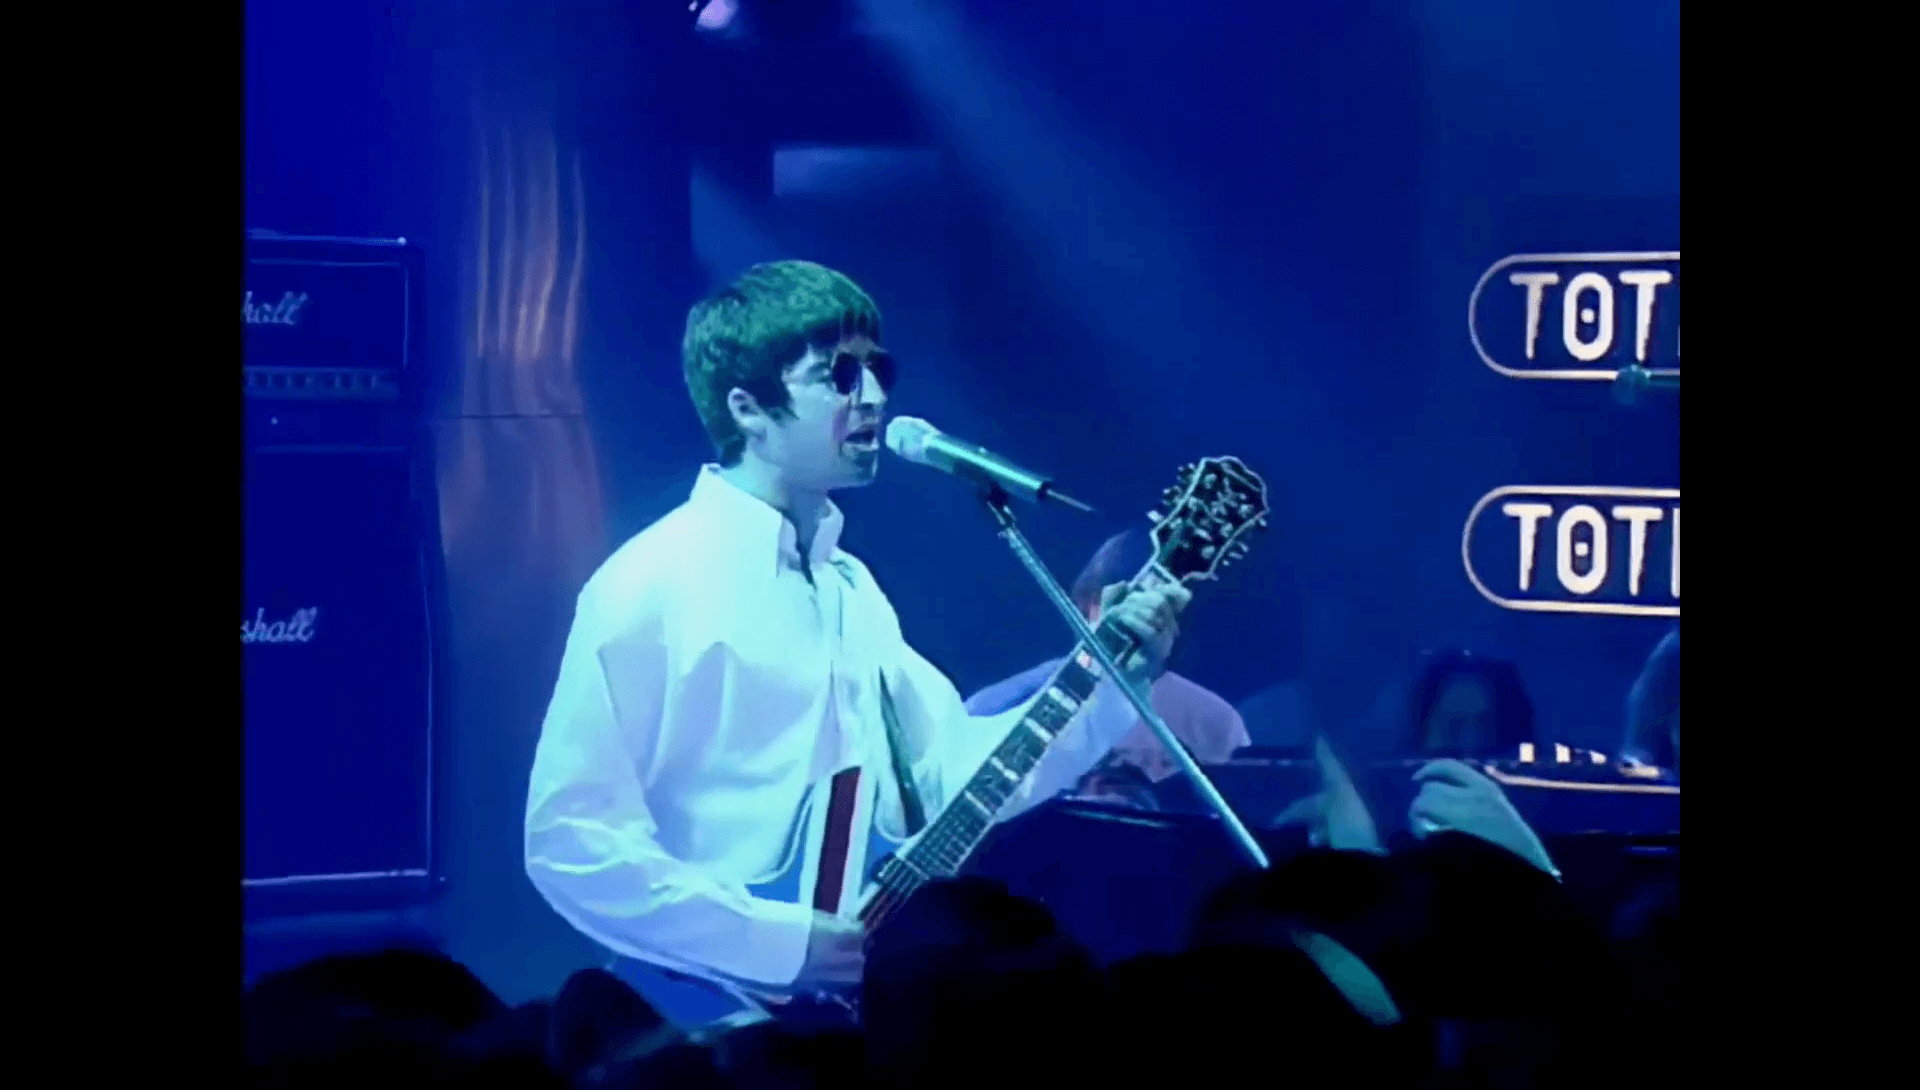 Oasis at Elstree Studios (UK) - February 21, 1996